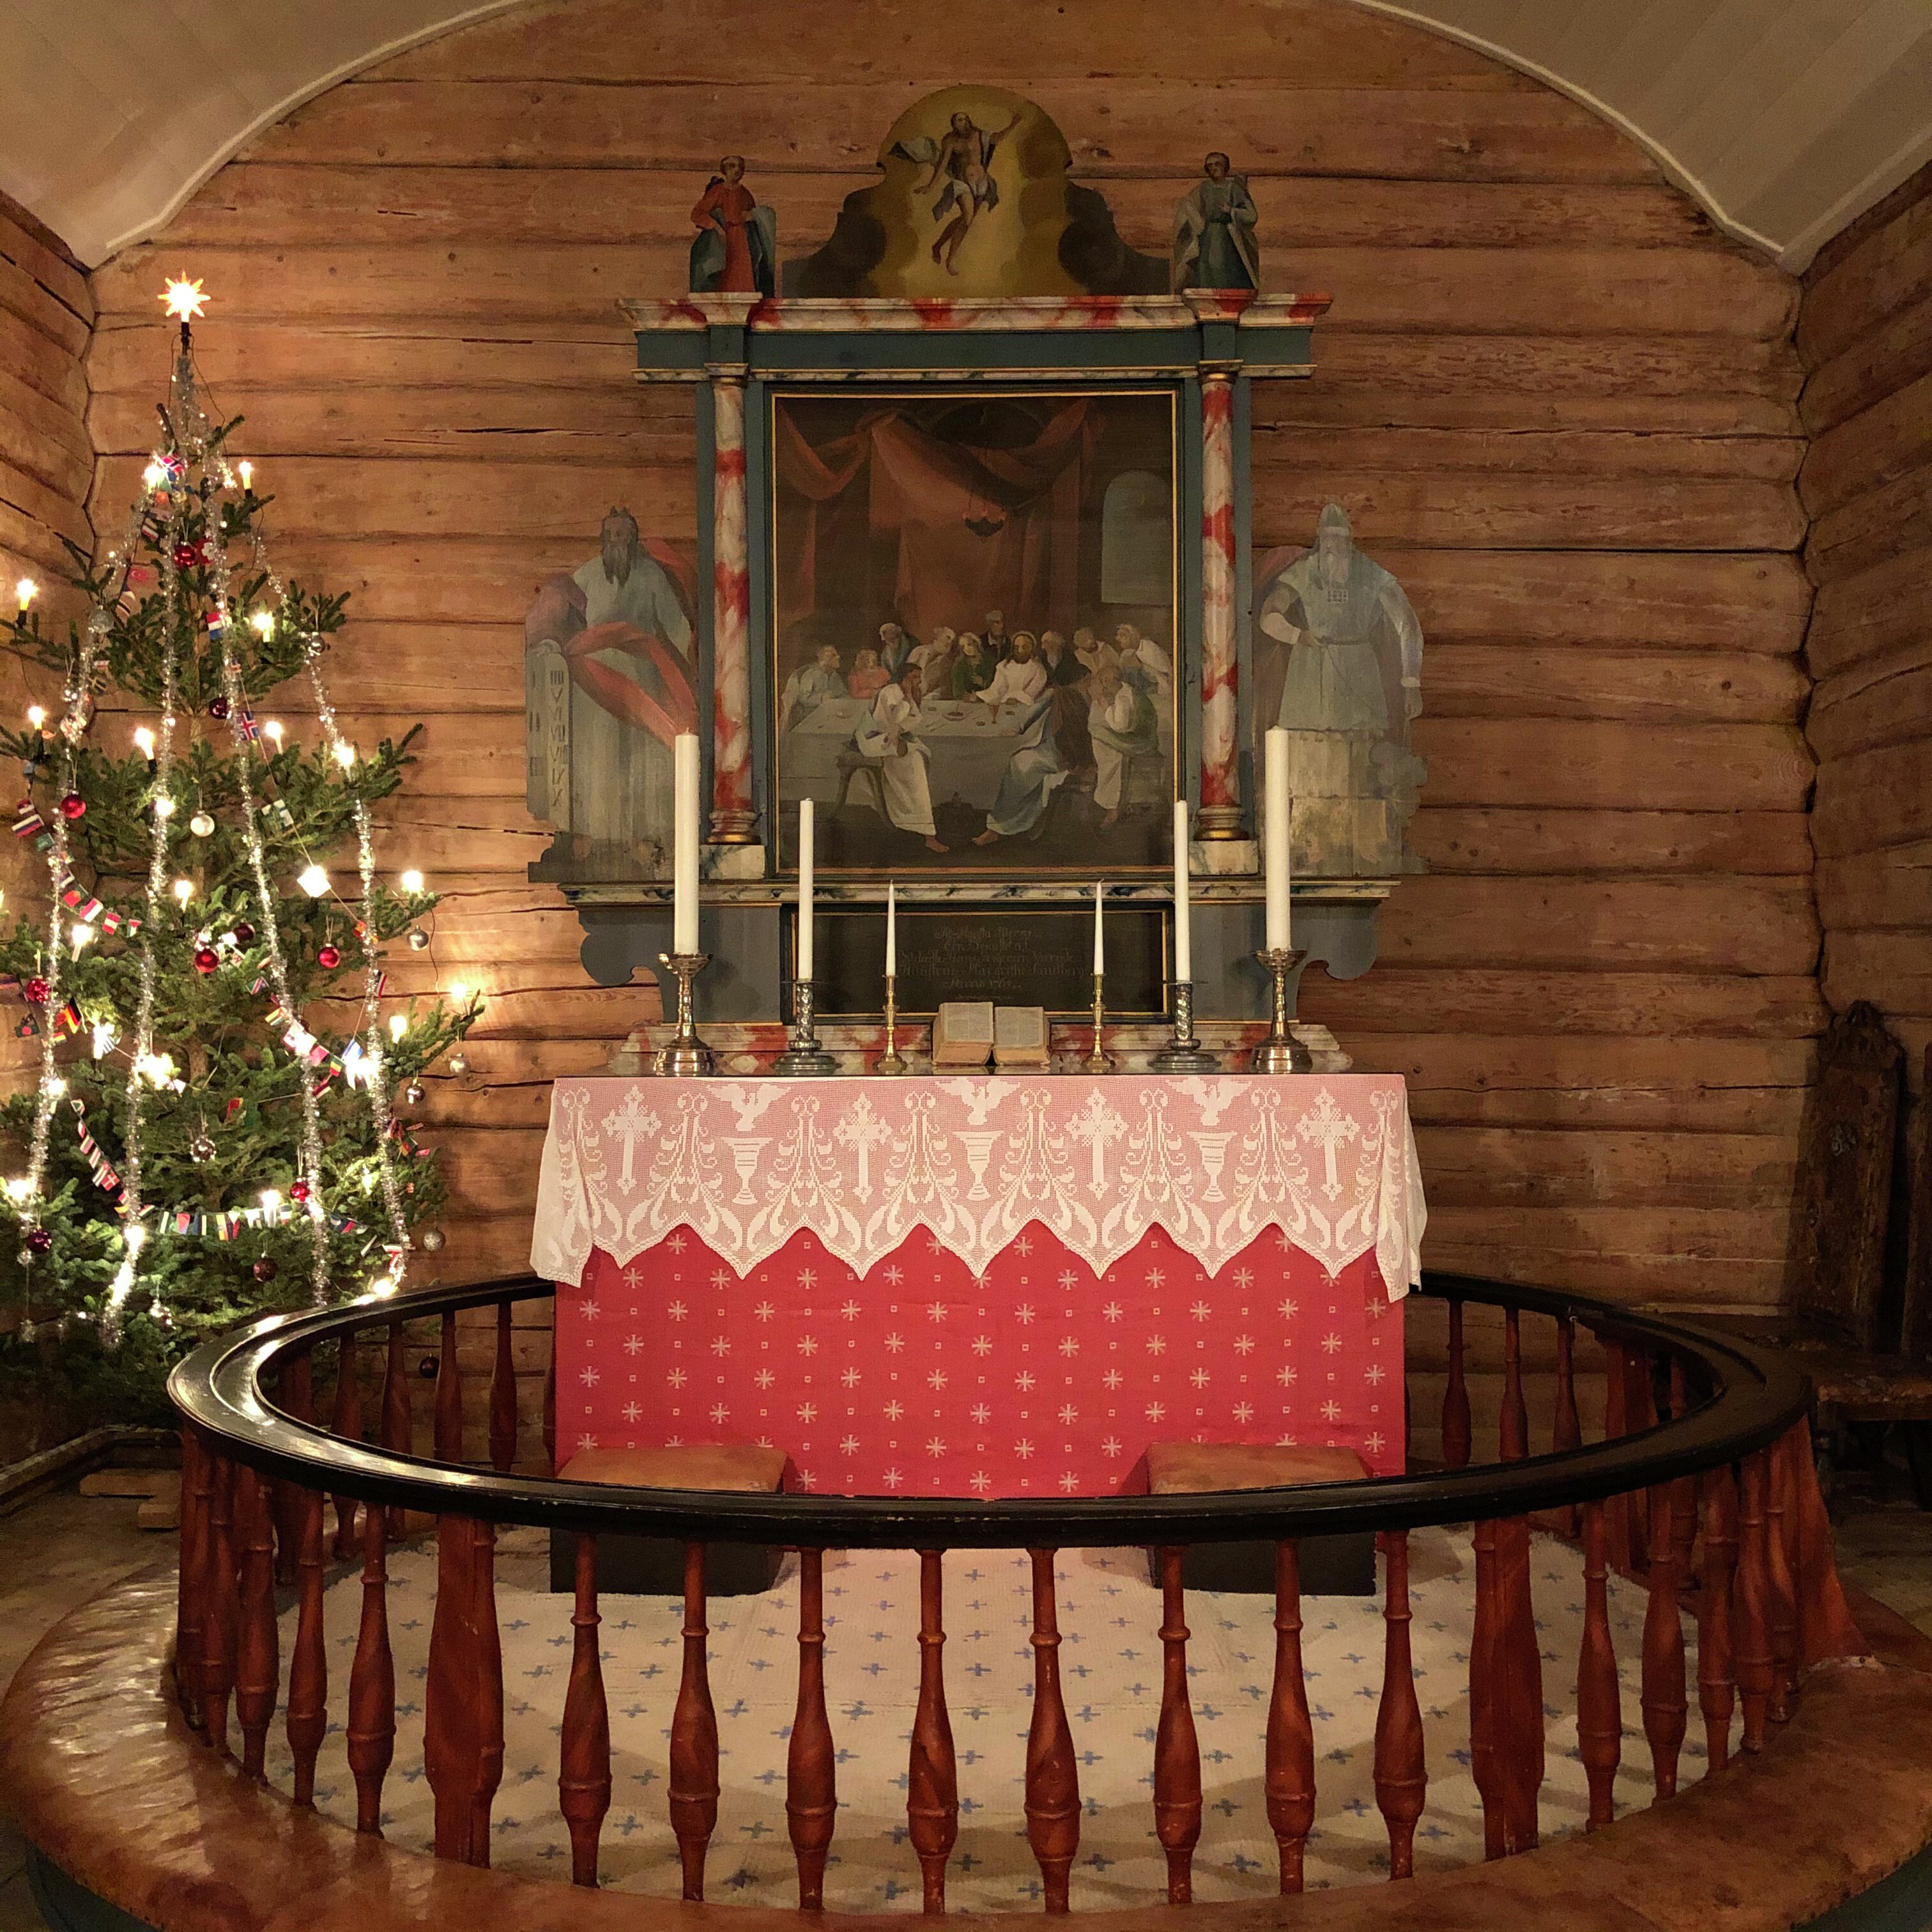 Flakstad church altar with Christmas tree